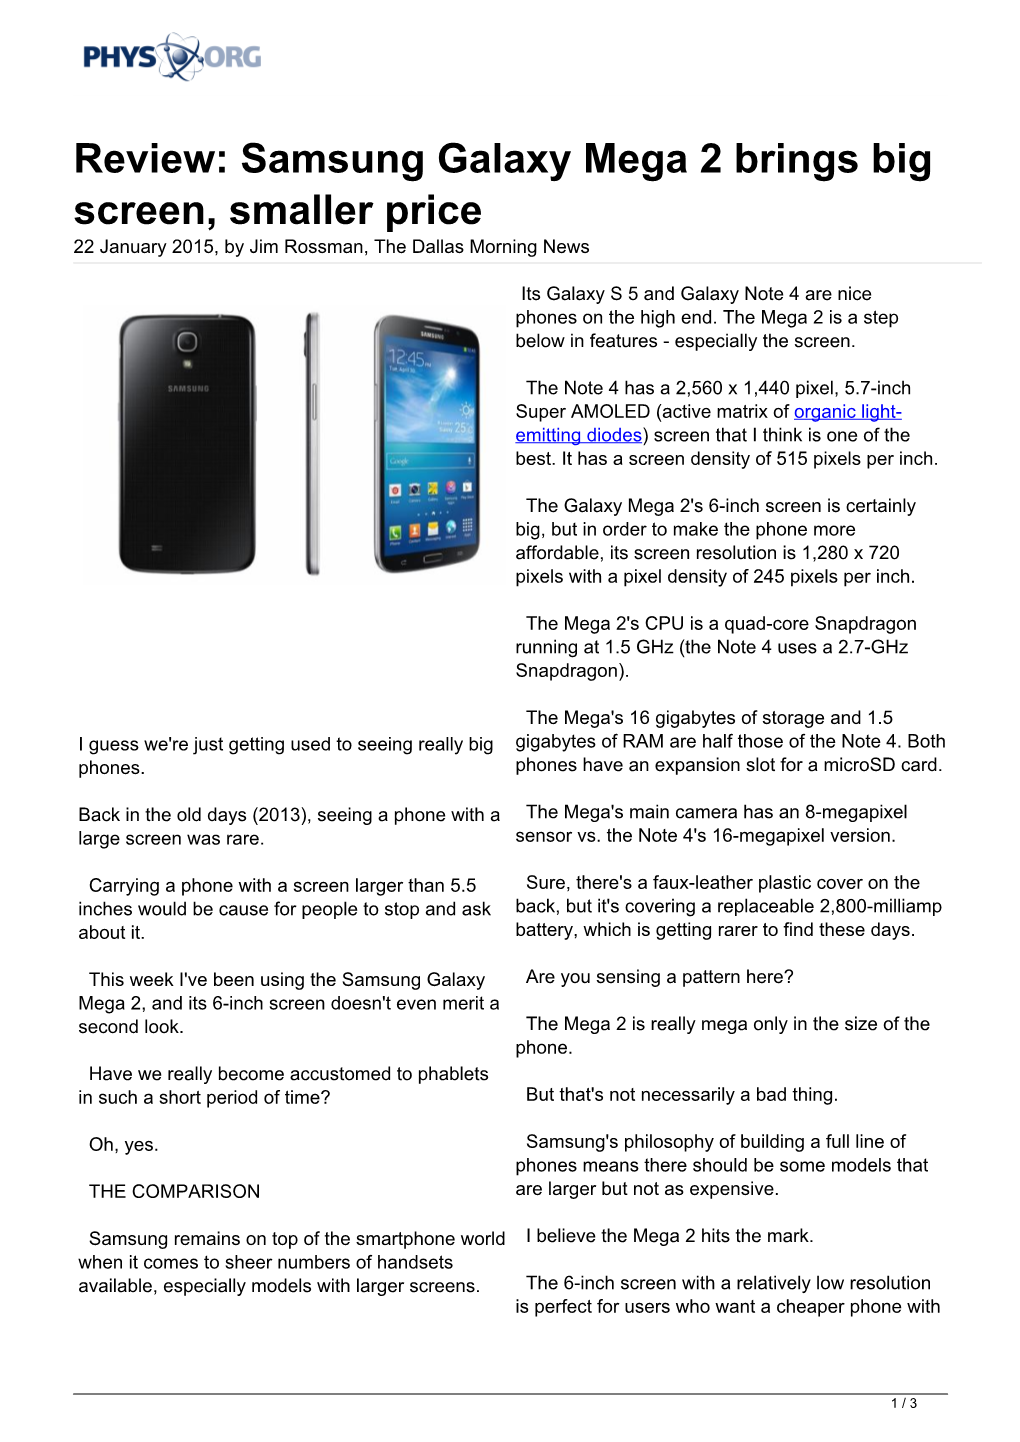 Samsung Galaxy Mega 2 Brings Big Screen, Smaller Price 22 January 2015, by Jim Rossman, the Dallas Morning News